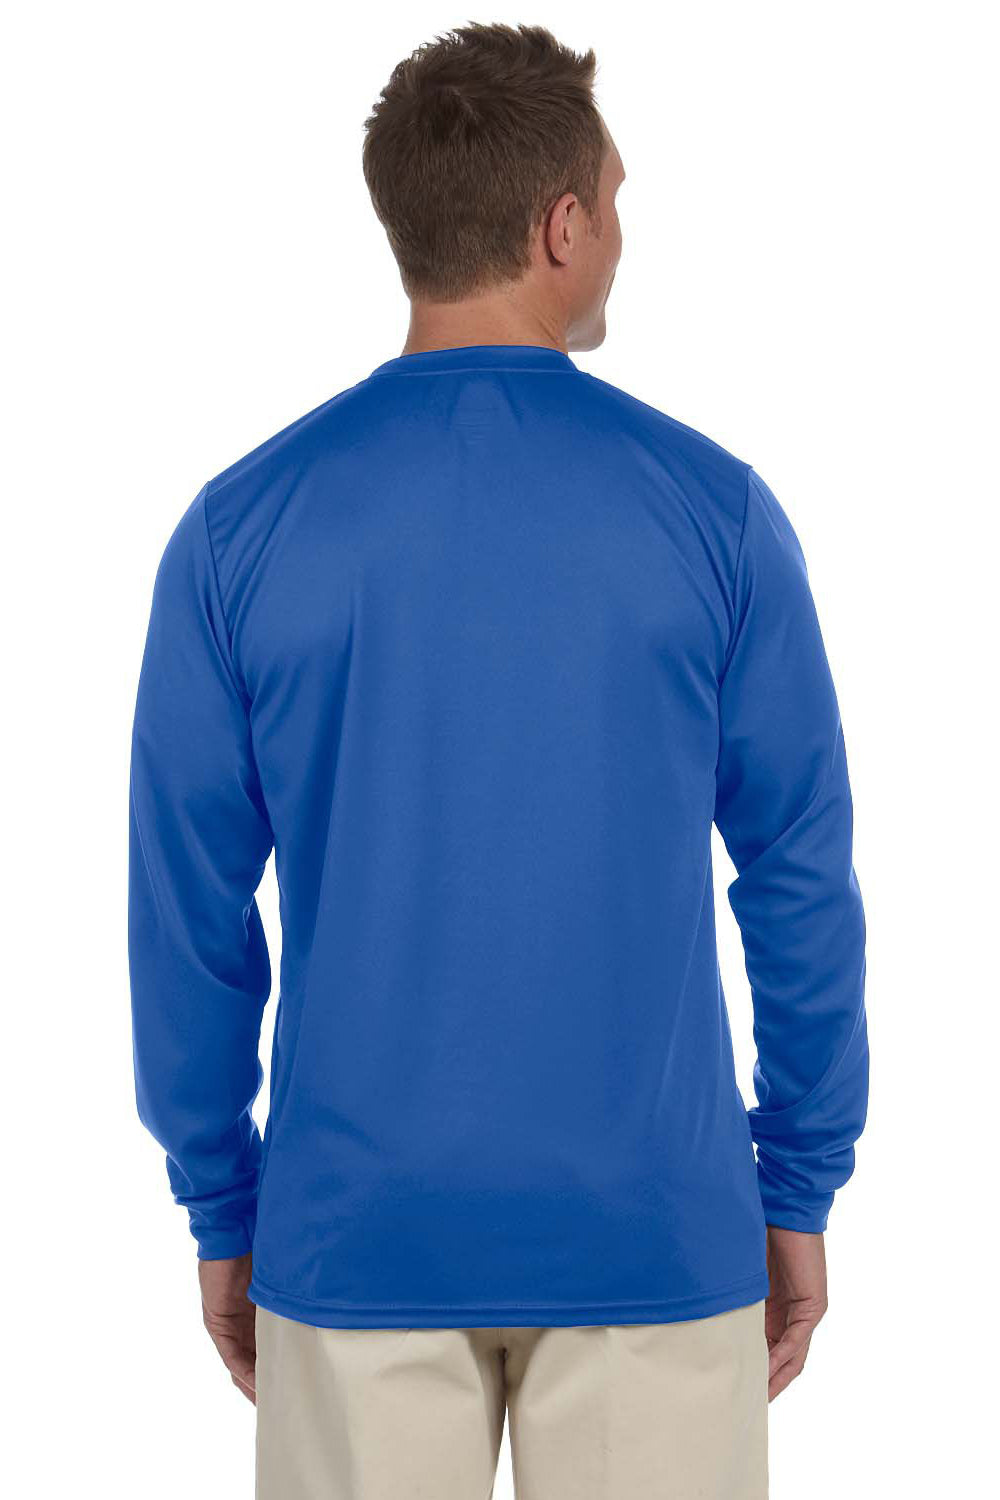 Augusta Sportswear 788 Mens Moisture Wicking Long Sleeve Crewneck T-Shirt Royal Blue Model Back